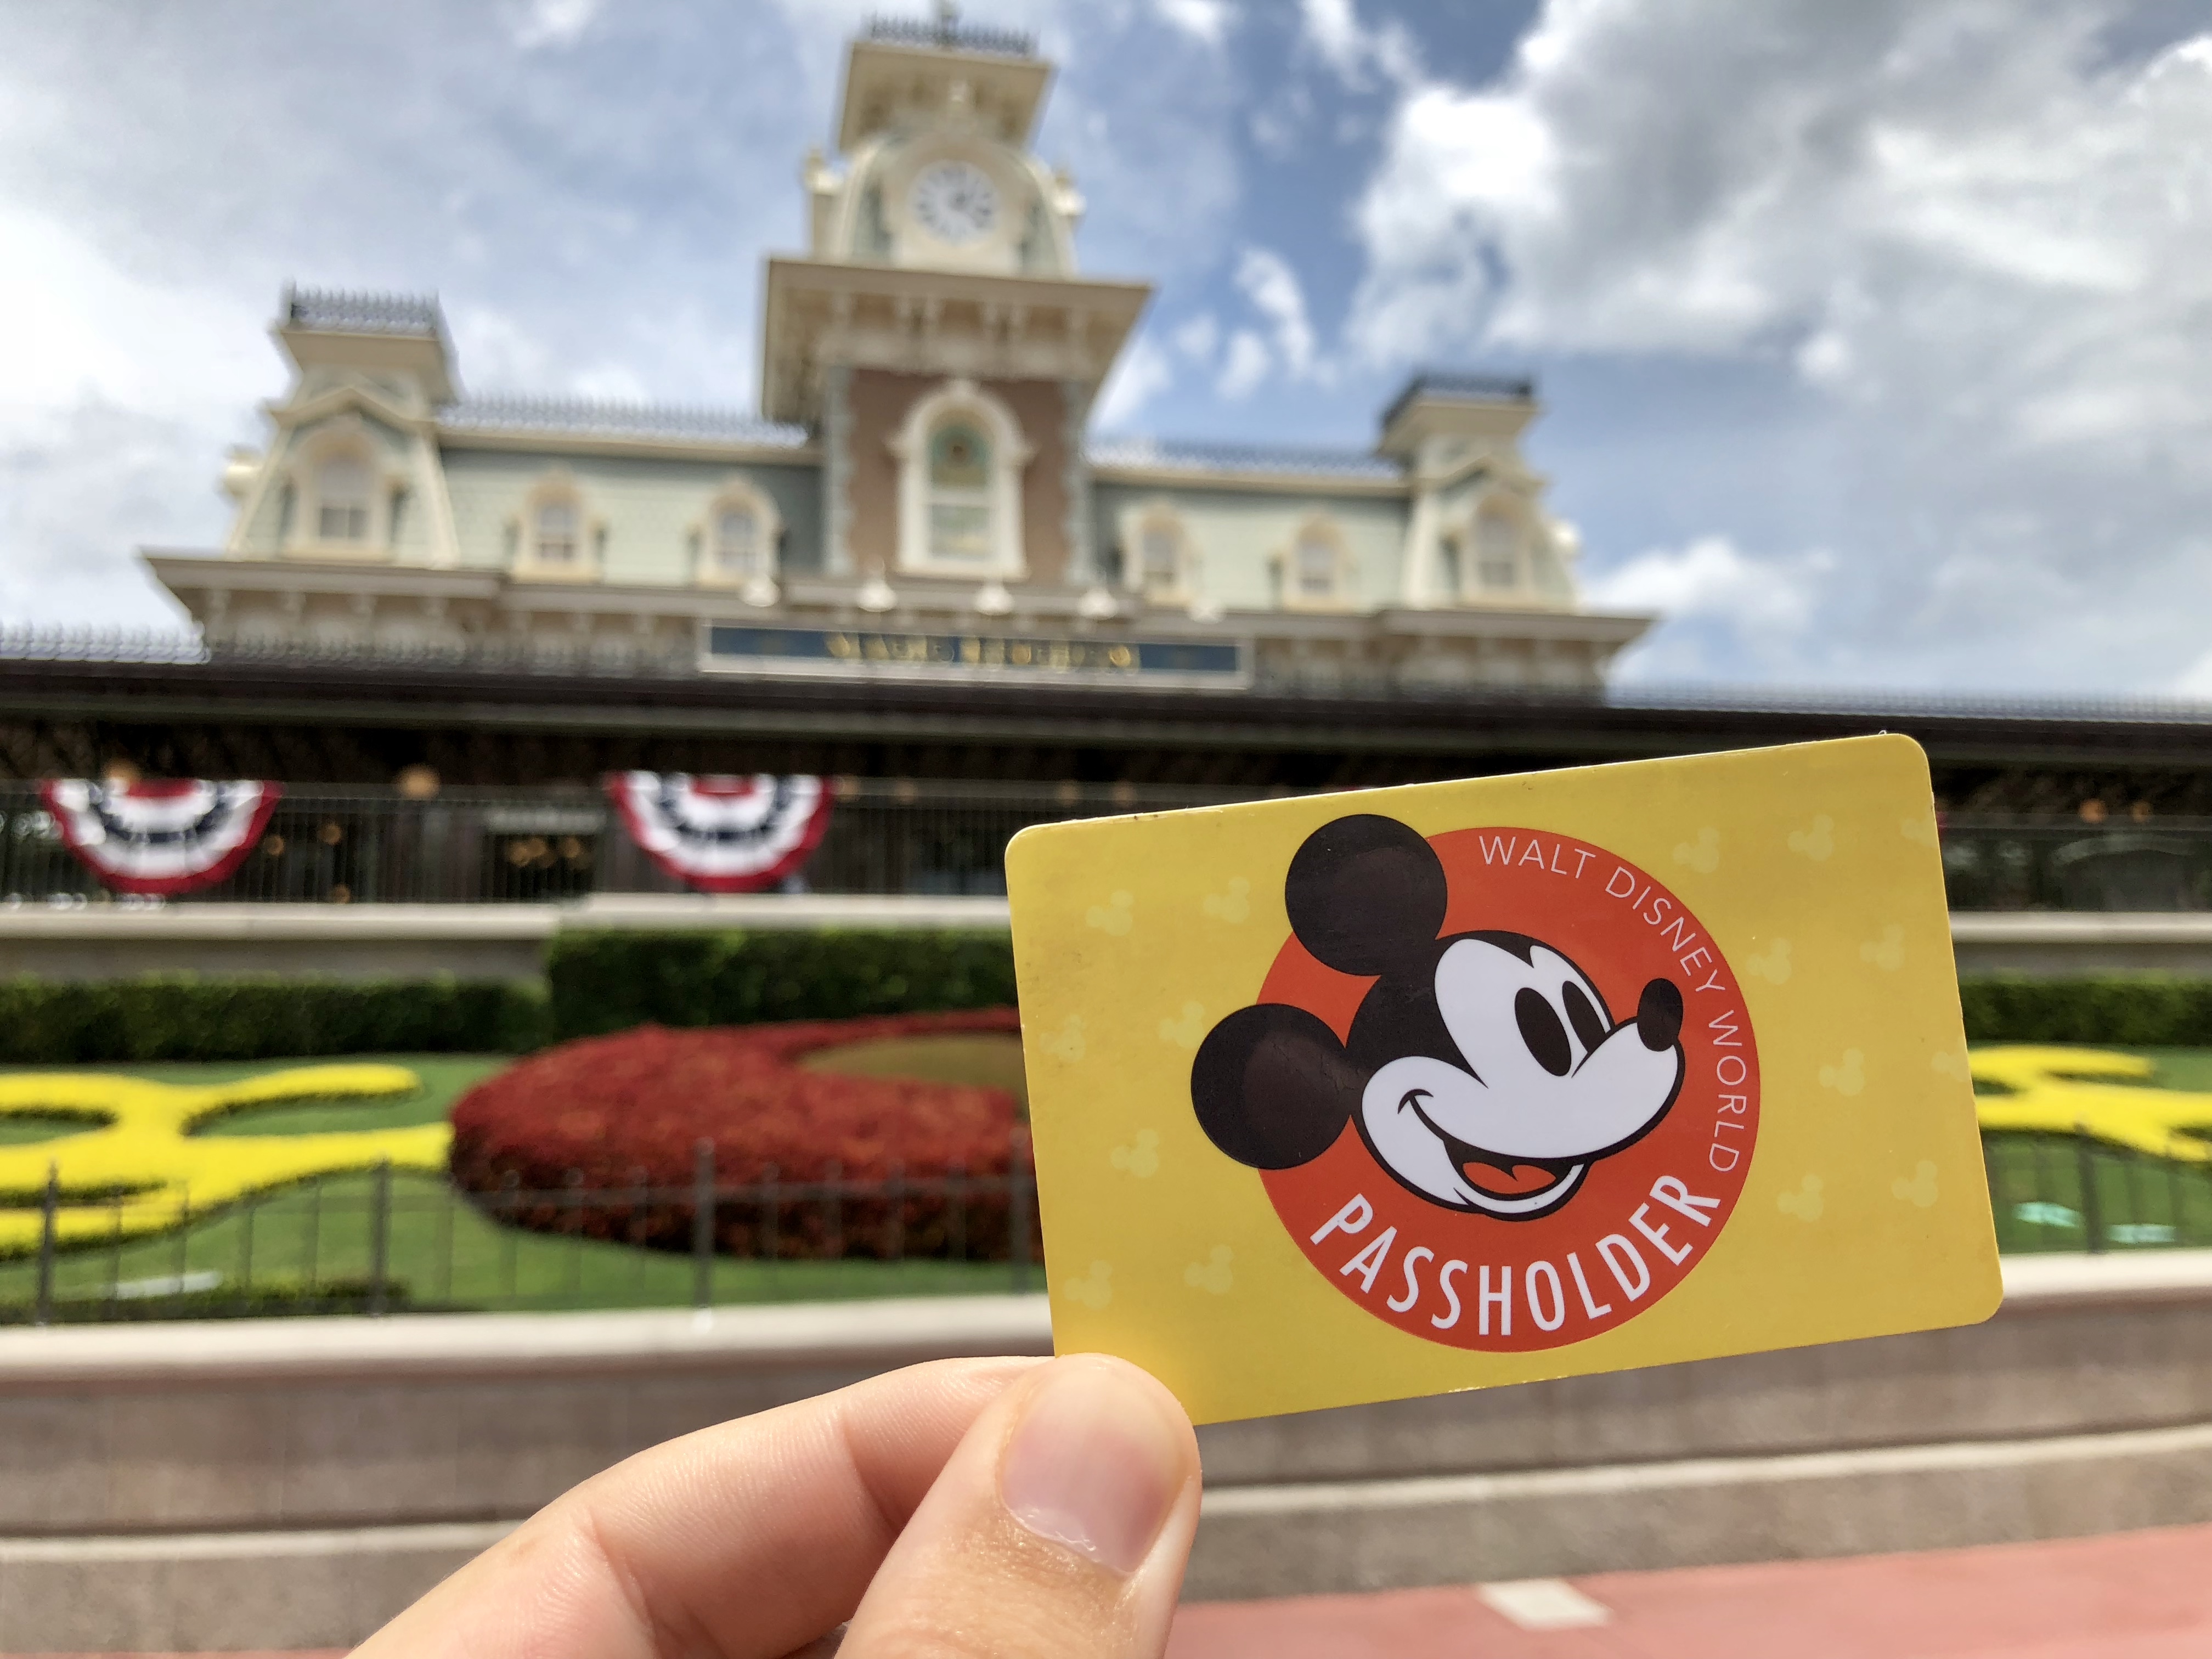 Walt Disney World Introduces New Theme Park Reservation System